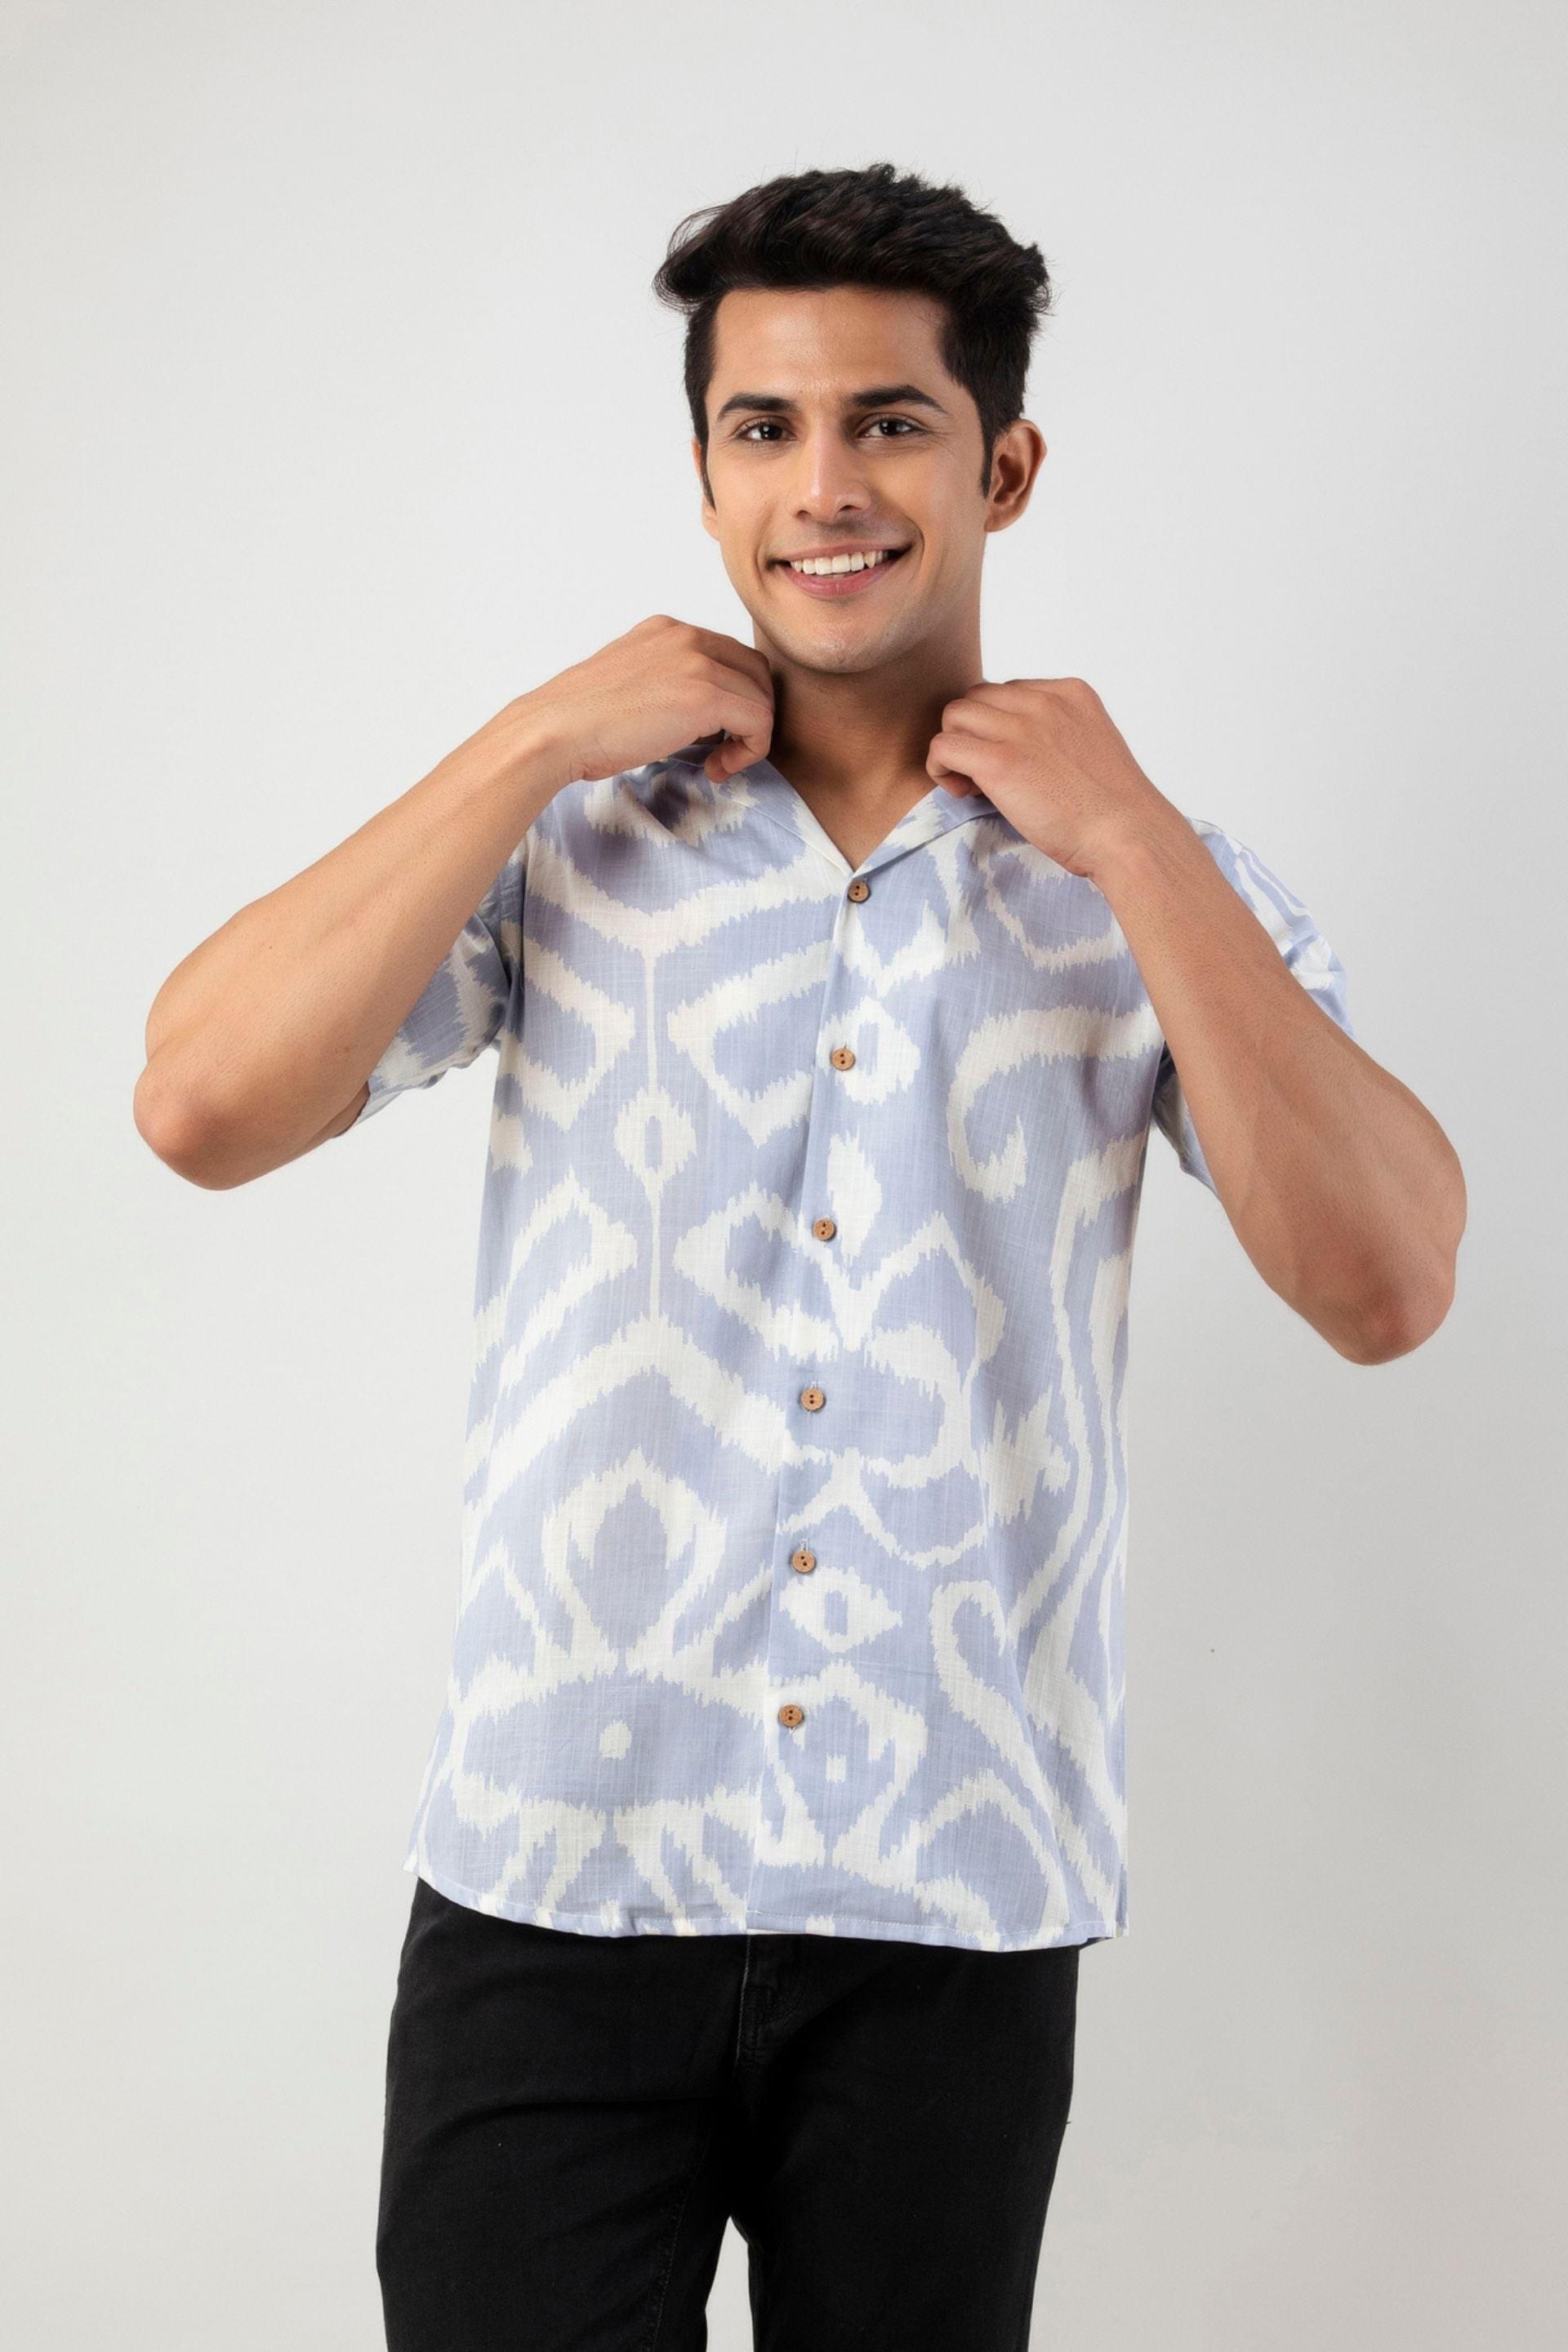 Firangi Yarn 100% Jaipuri Cotton Abstract Printed Cuban Collar Shirt- Lilac Color